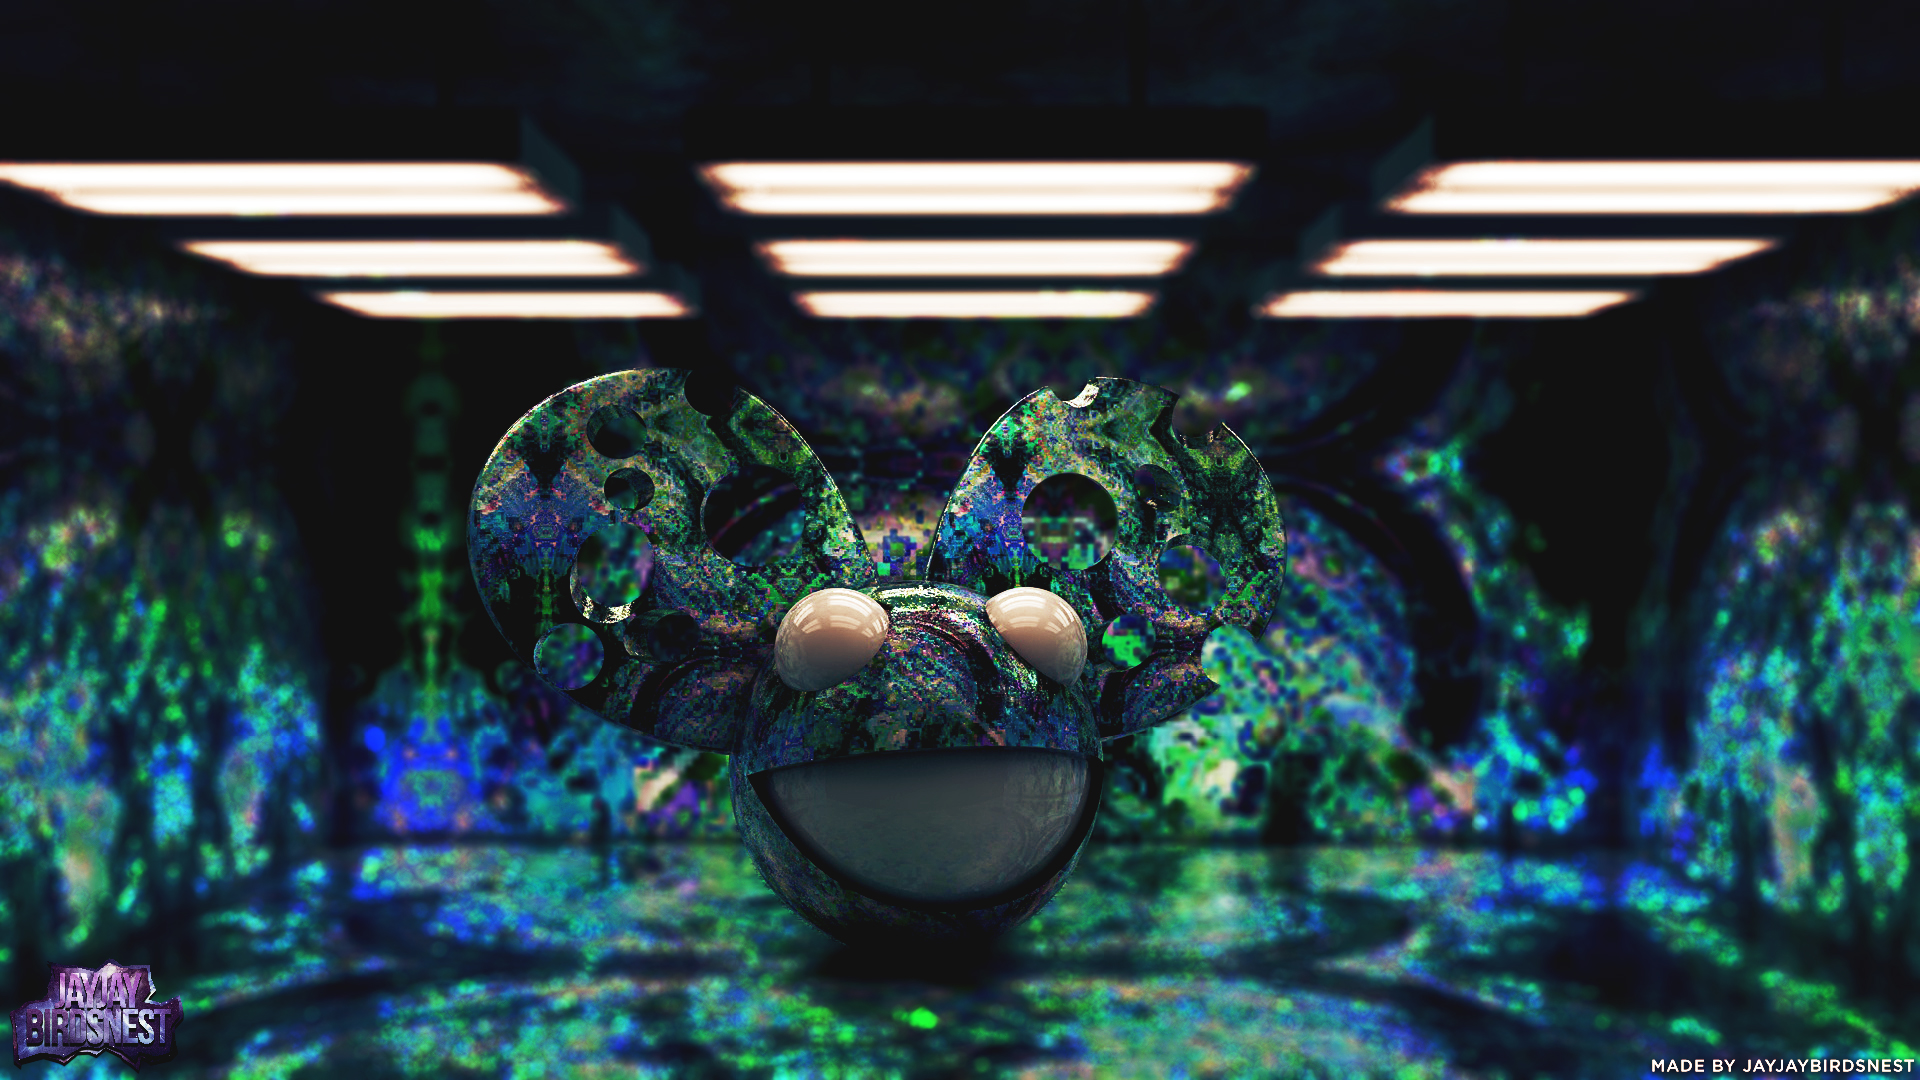 Methmau5 - Trippy Deadmau5 Wallpaper by jayjaybirdsnest on DeviantArt